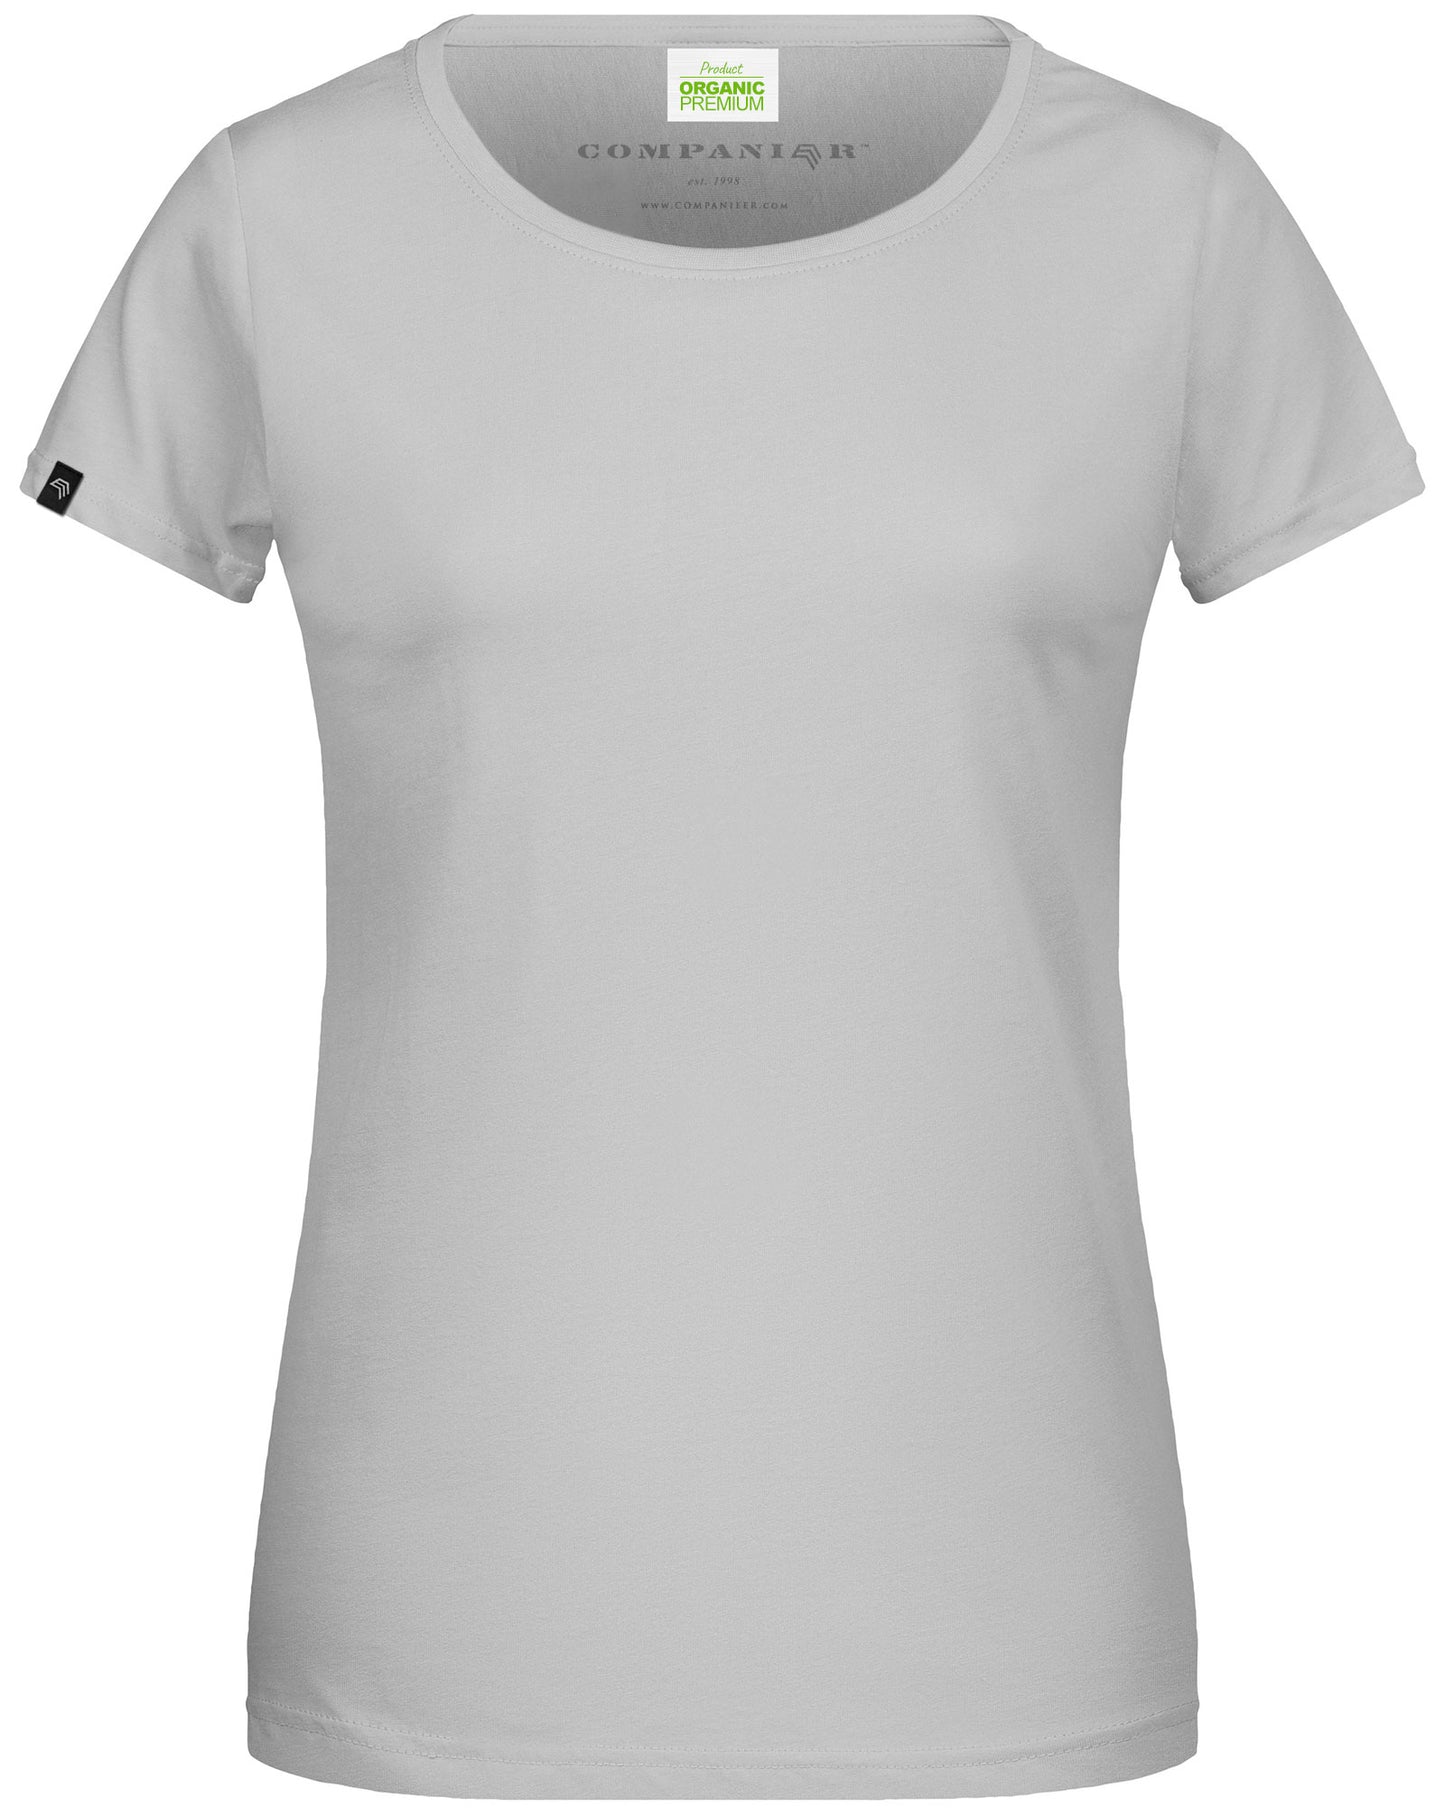 JAN 8007 ― Damen Bio-Baumwolle T-Shirt - Soft Grau